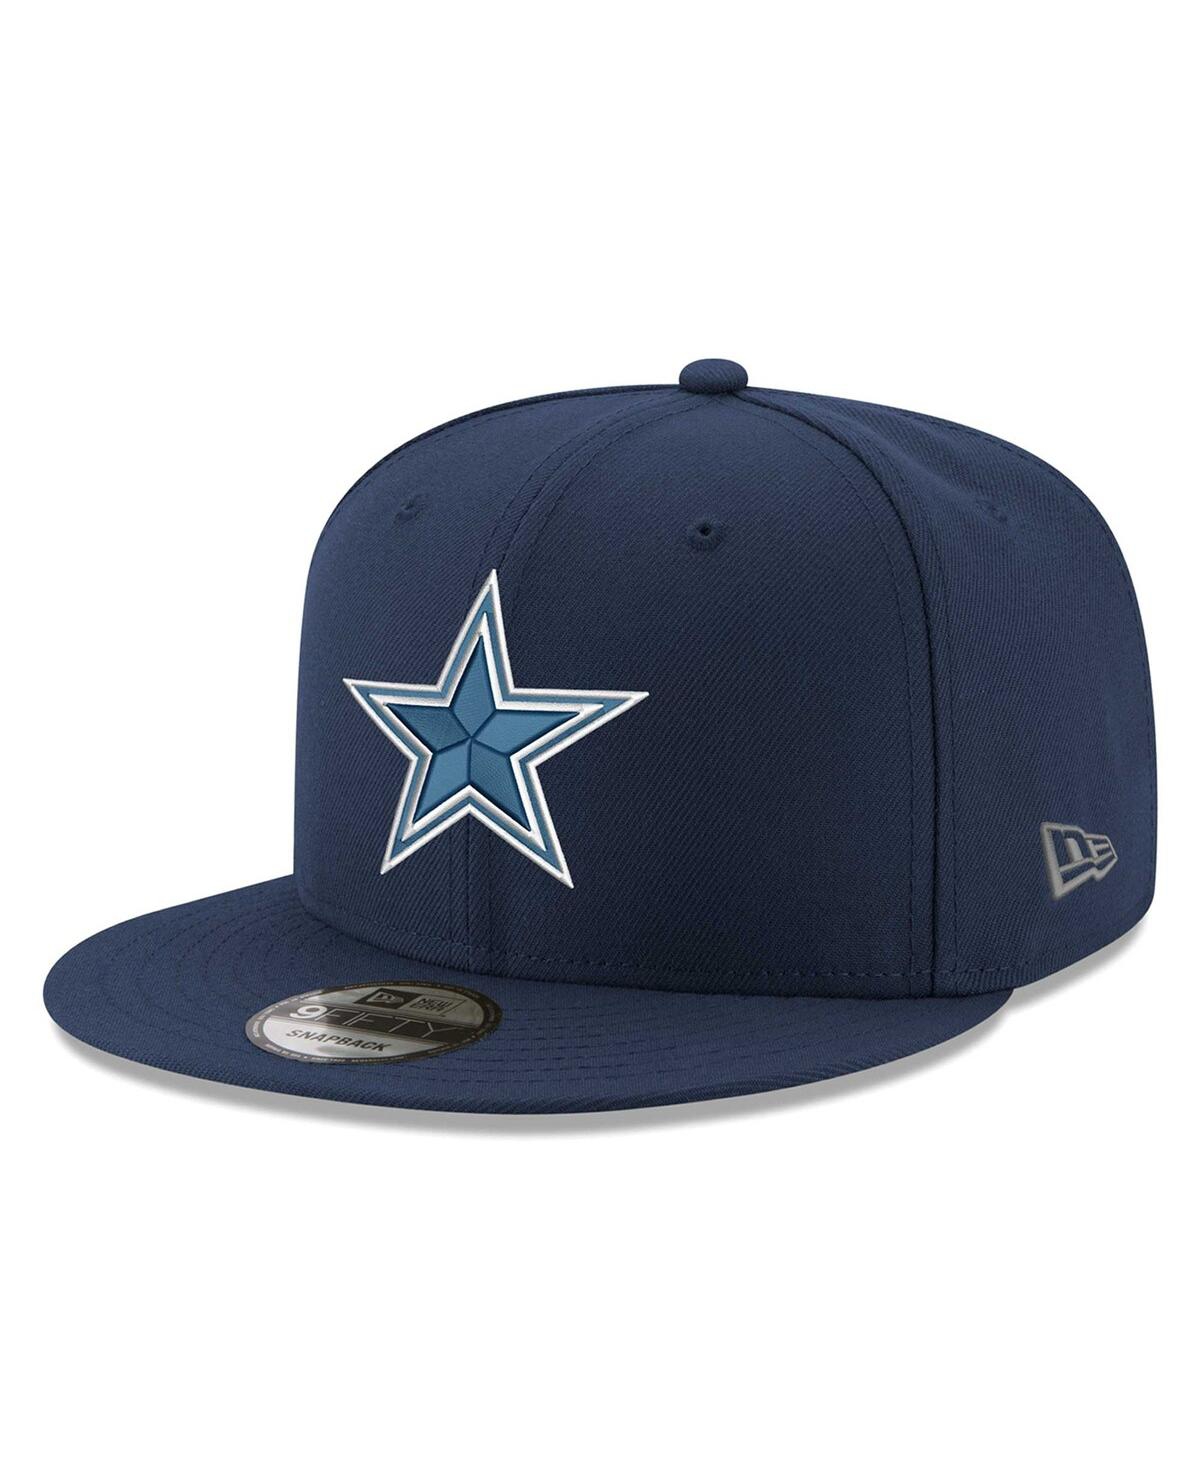 New Era Babies' Infant Boys And Girls  Navy Dallas Cowboys My 1st 9fifty Snapback Hat